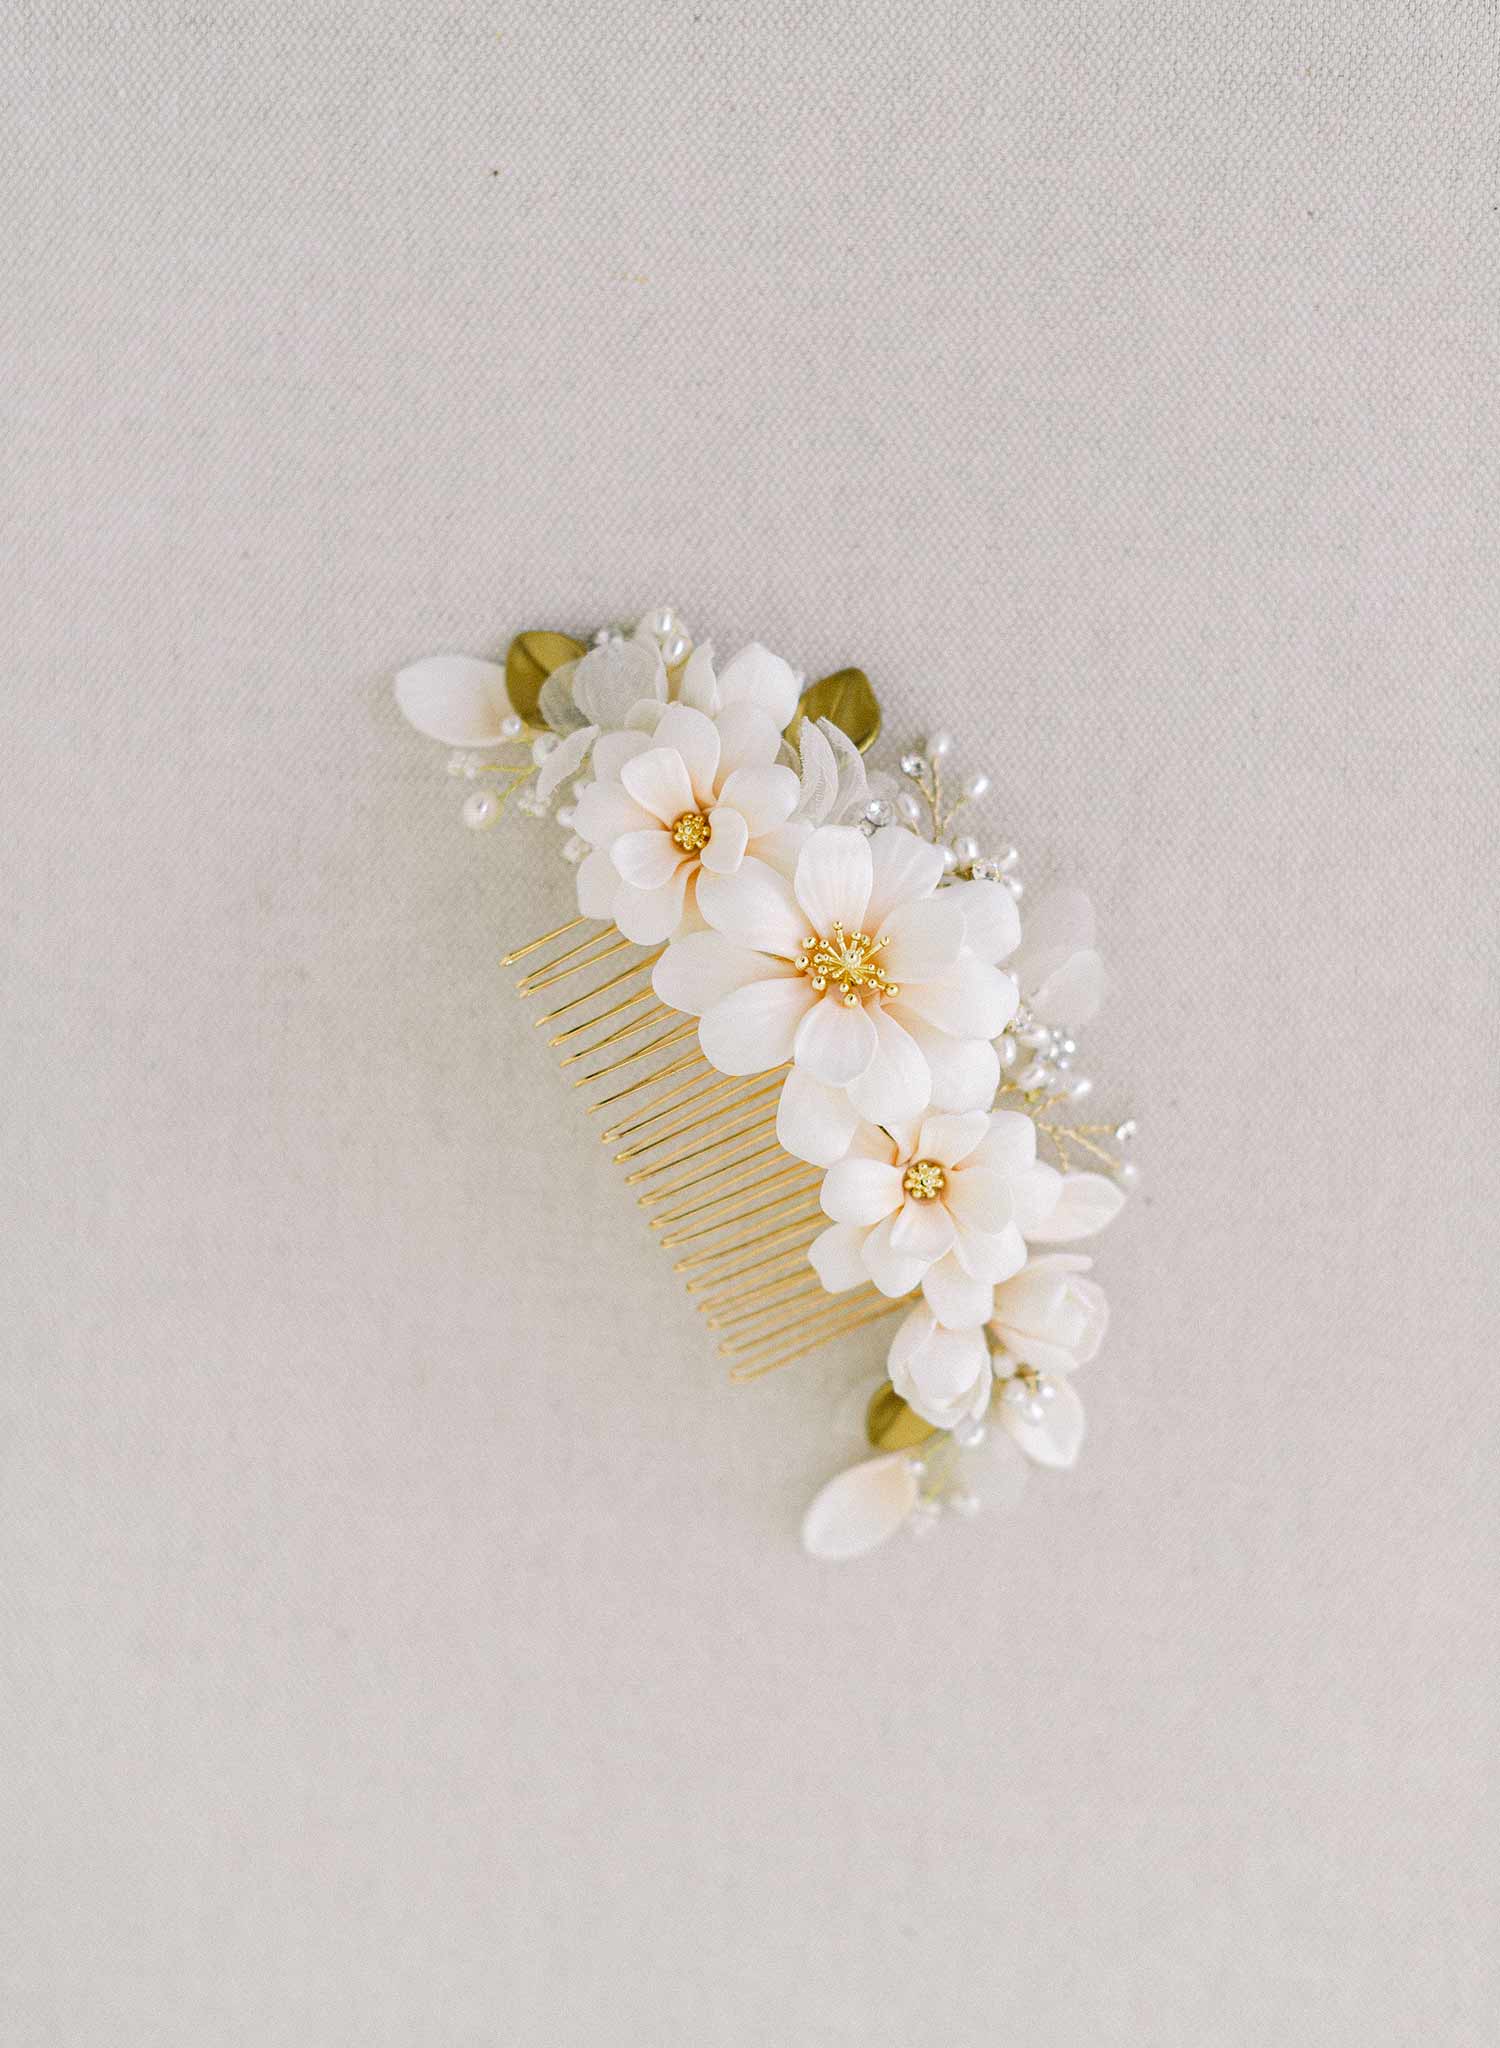 Flowering magnolia bridal hair comb - Style #2332